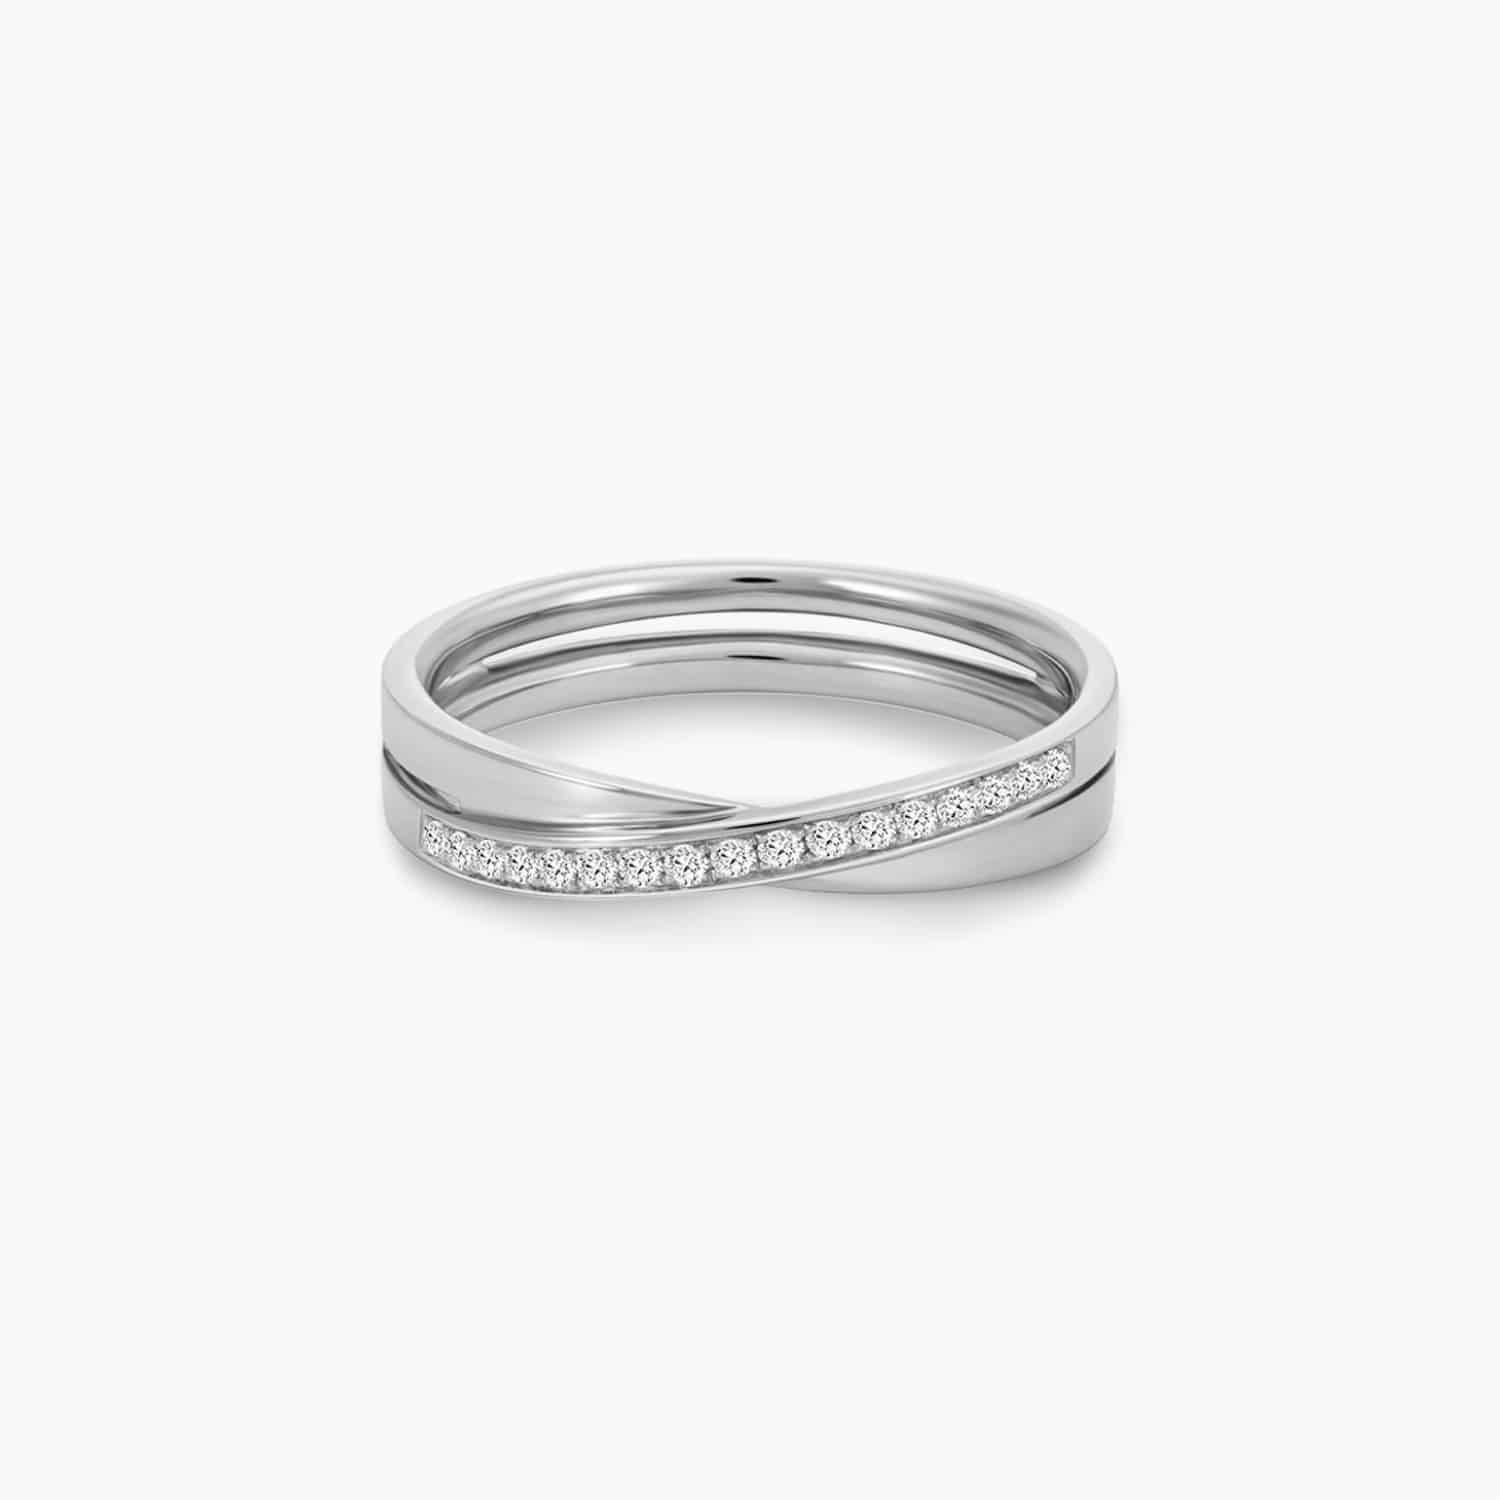 LVC Desirio Cross Wedding Ring for women in White Gold with Diamonds